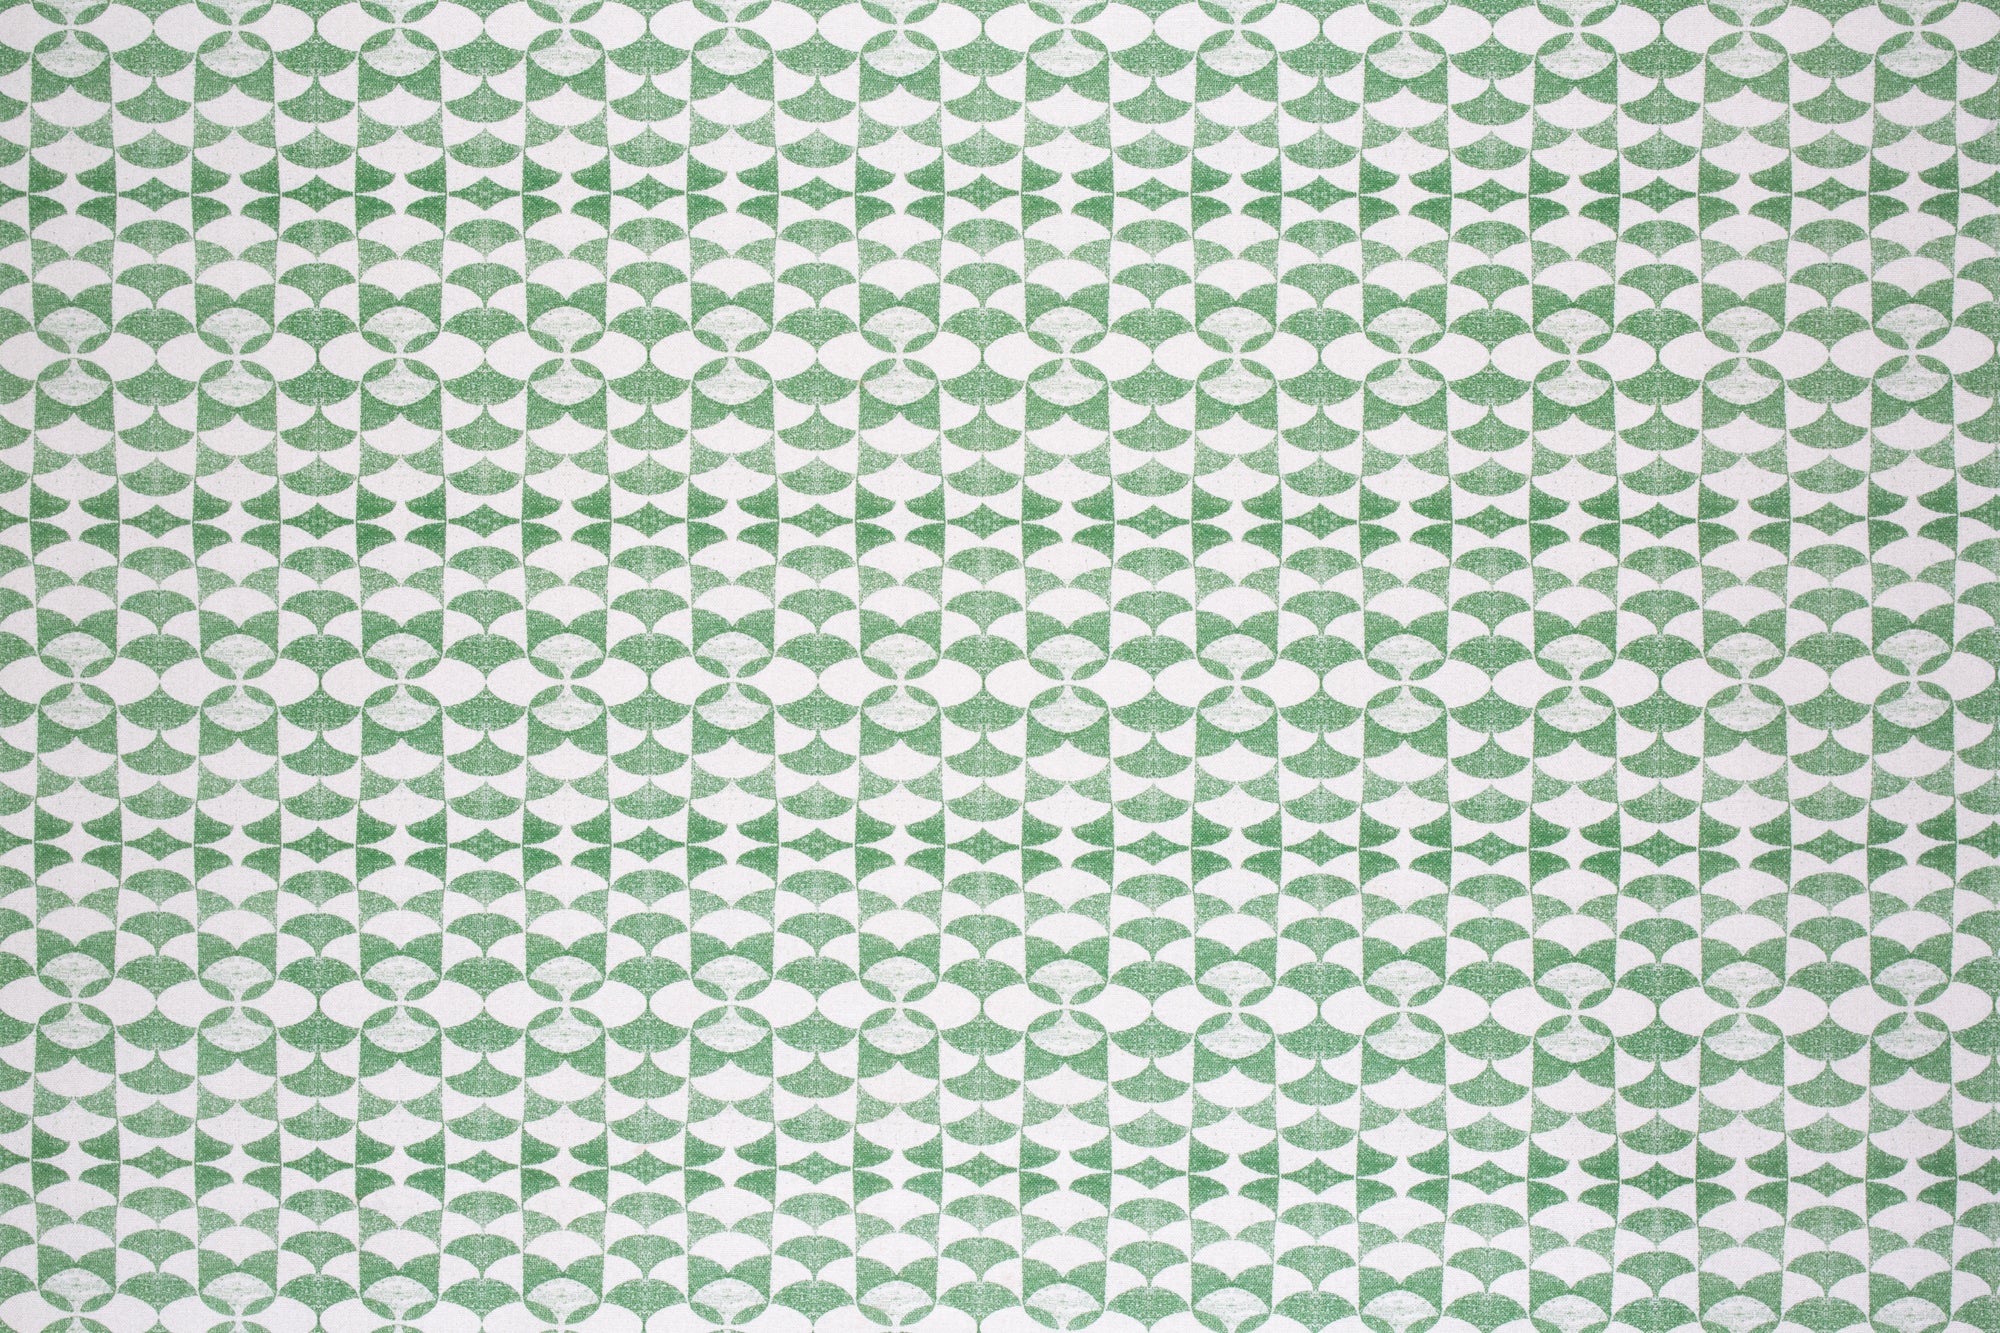 Detail of fabric in a geometric stripe pattern in green on a white field.